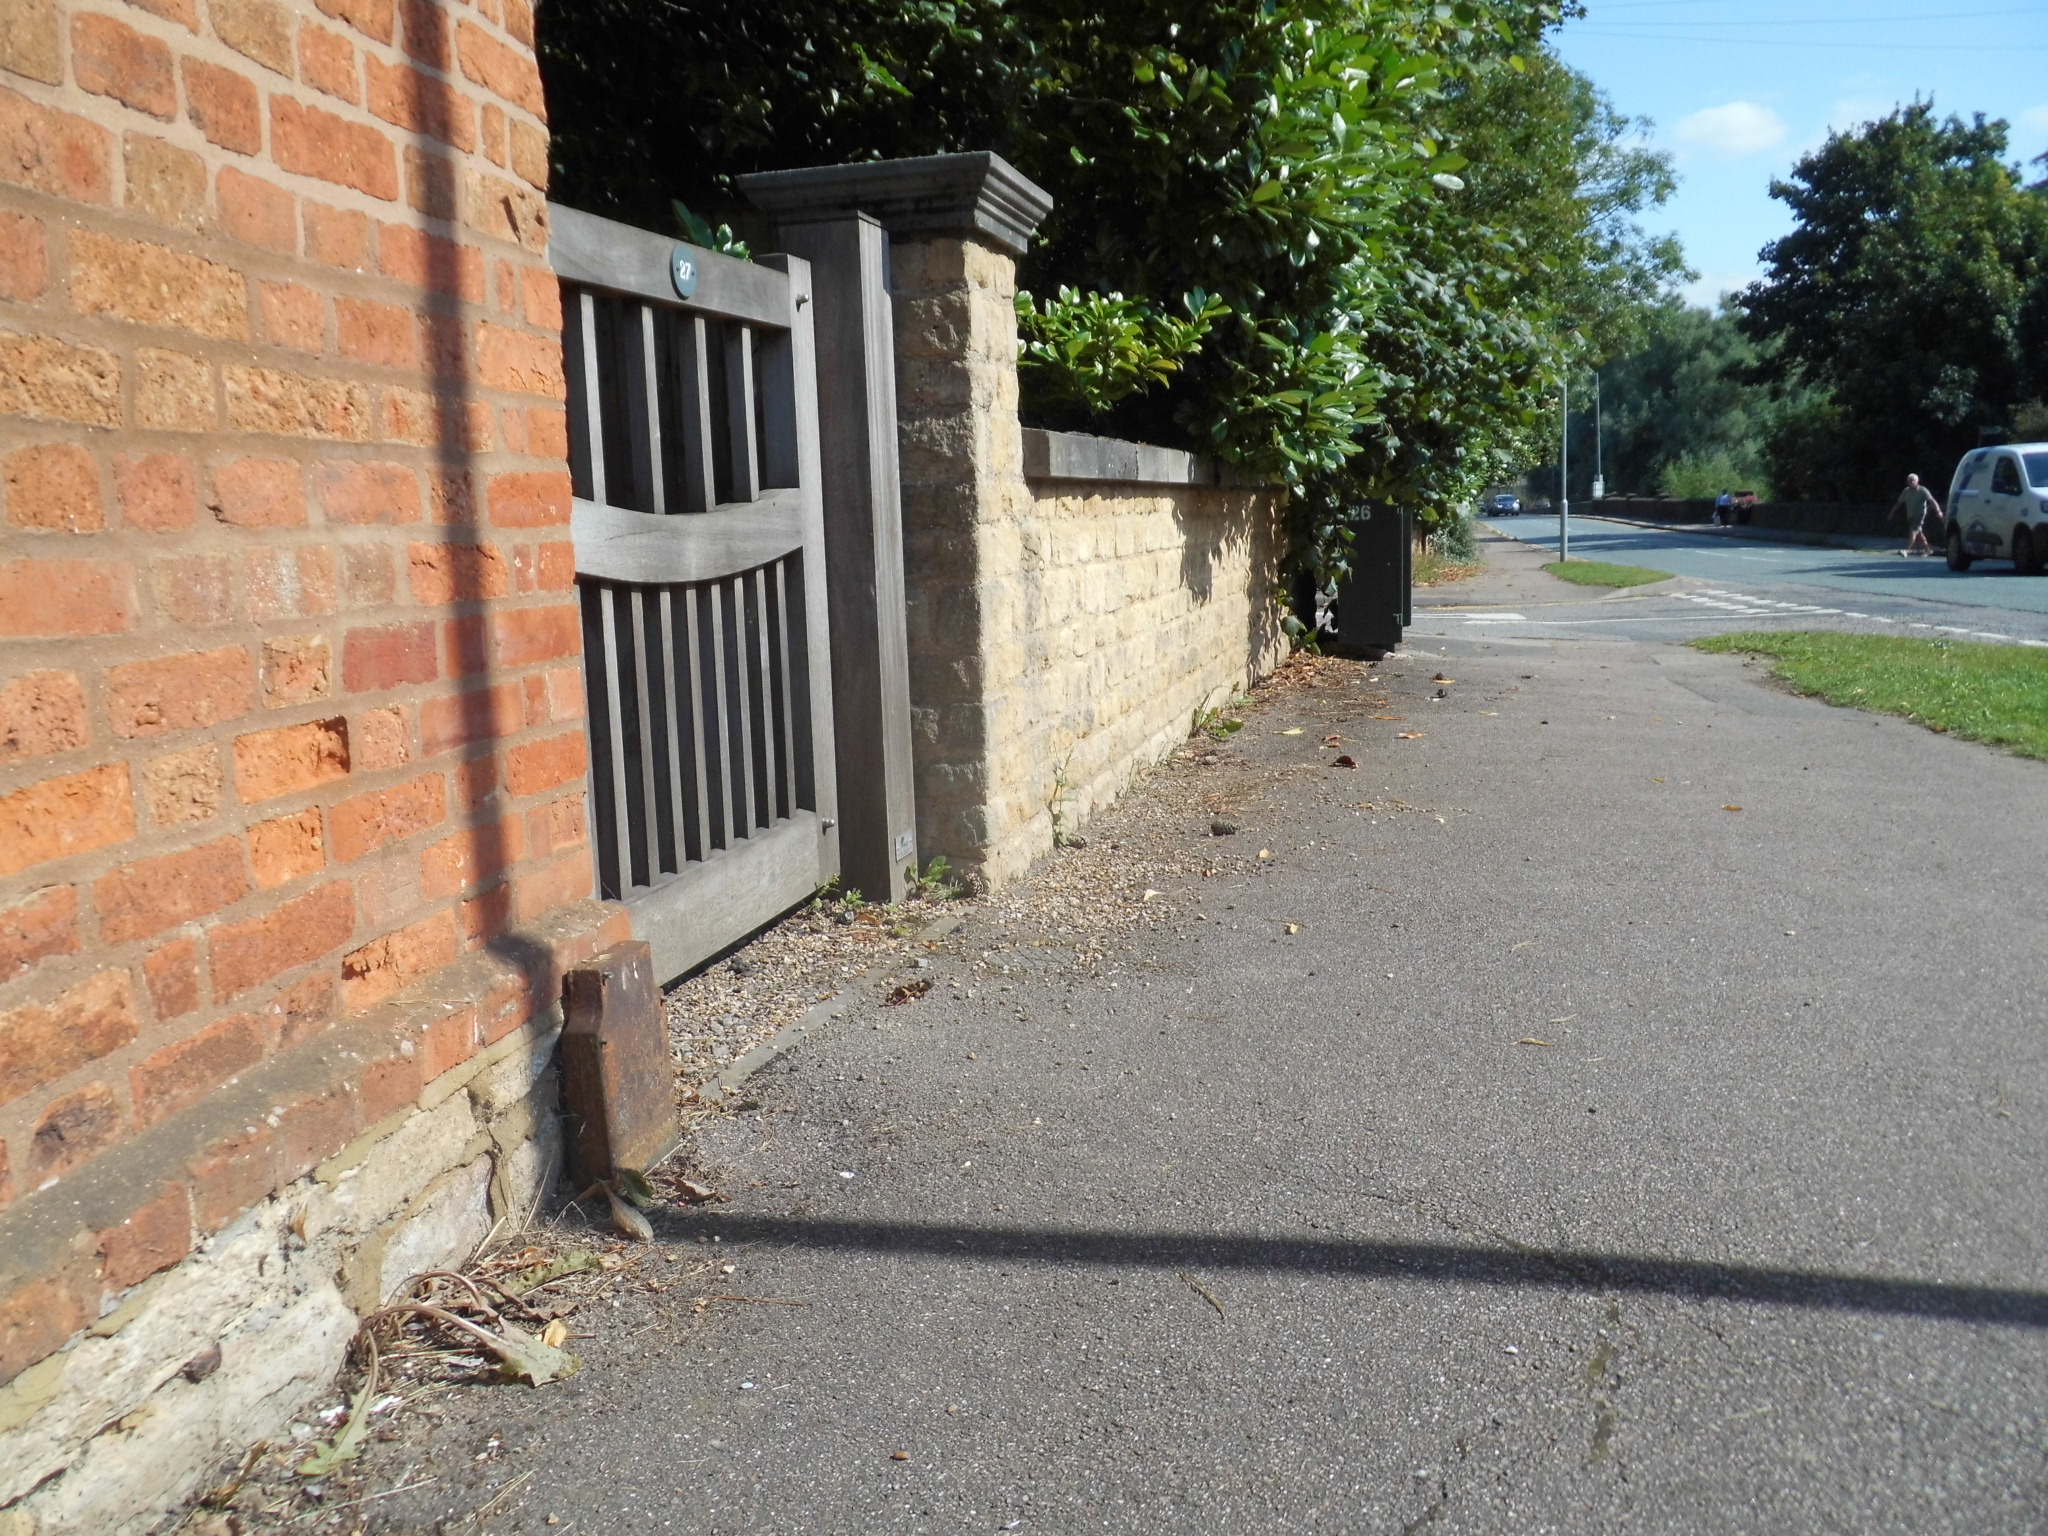 Telegraph cable marker post at 27 London Road, Old Stratford, nr Milton Keynes by Derek Pattenson 